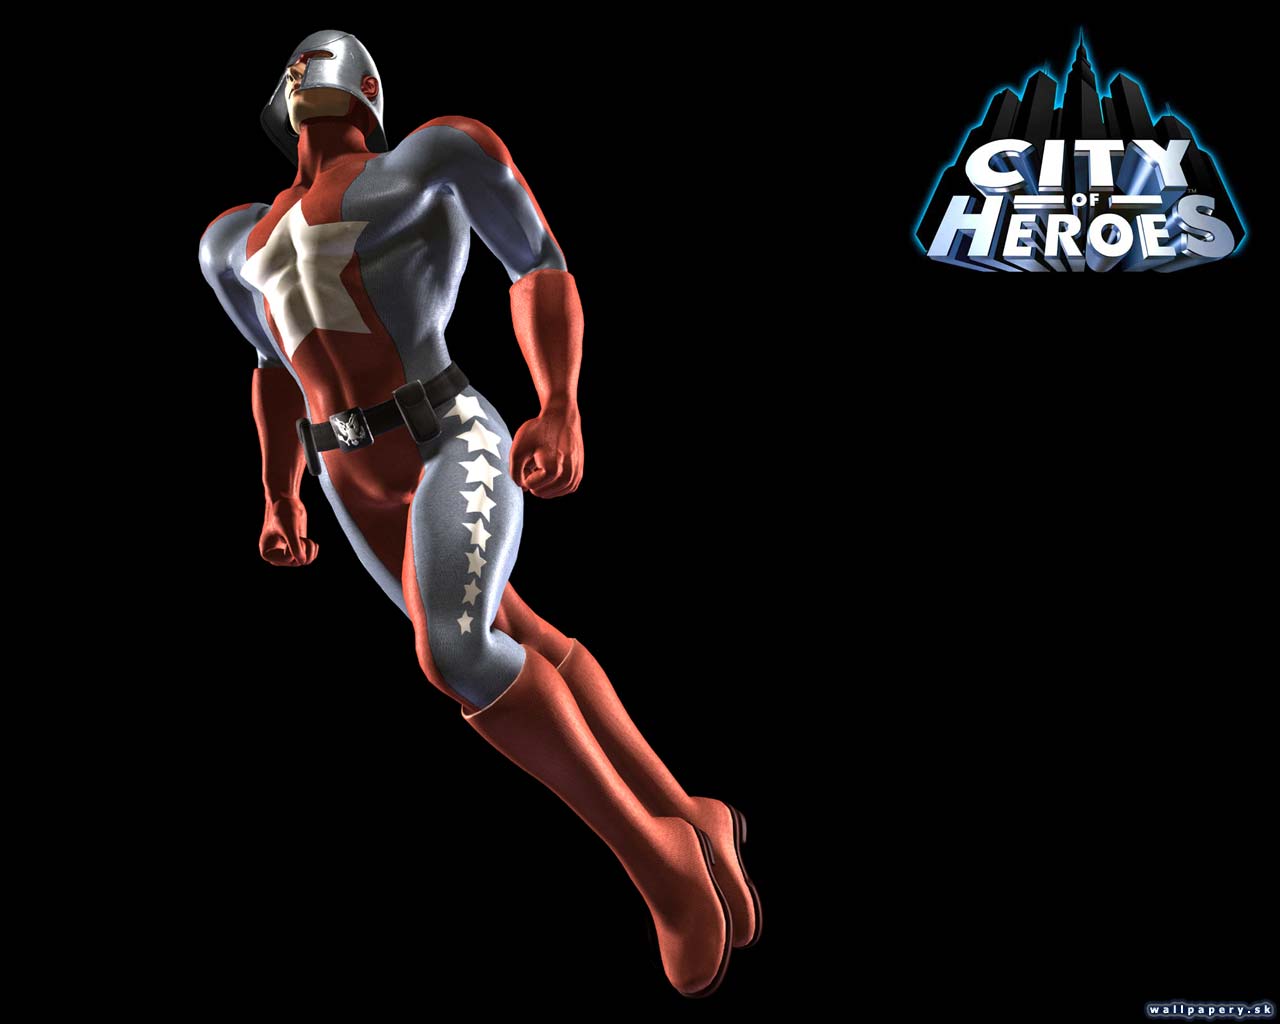 City of Heroes - wallpaper 4